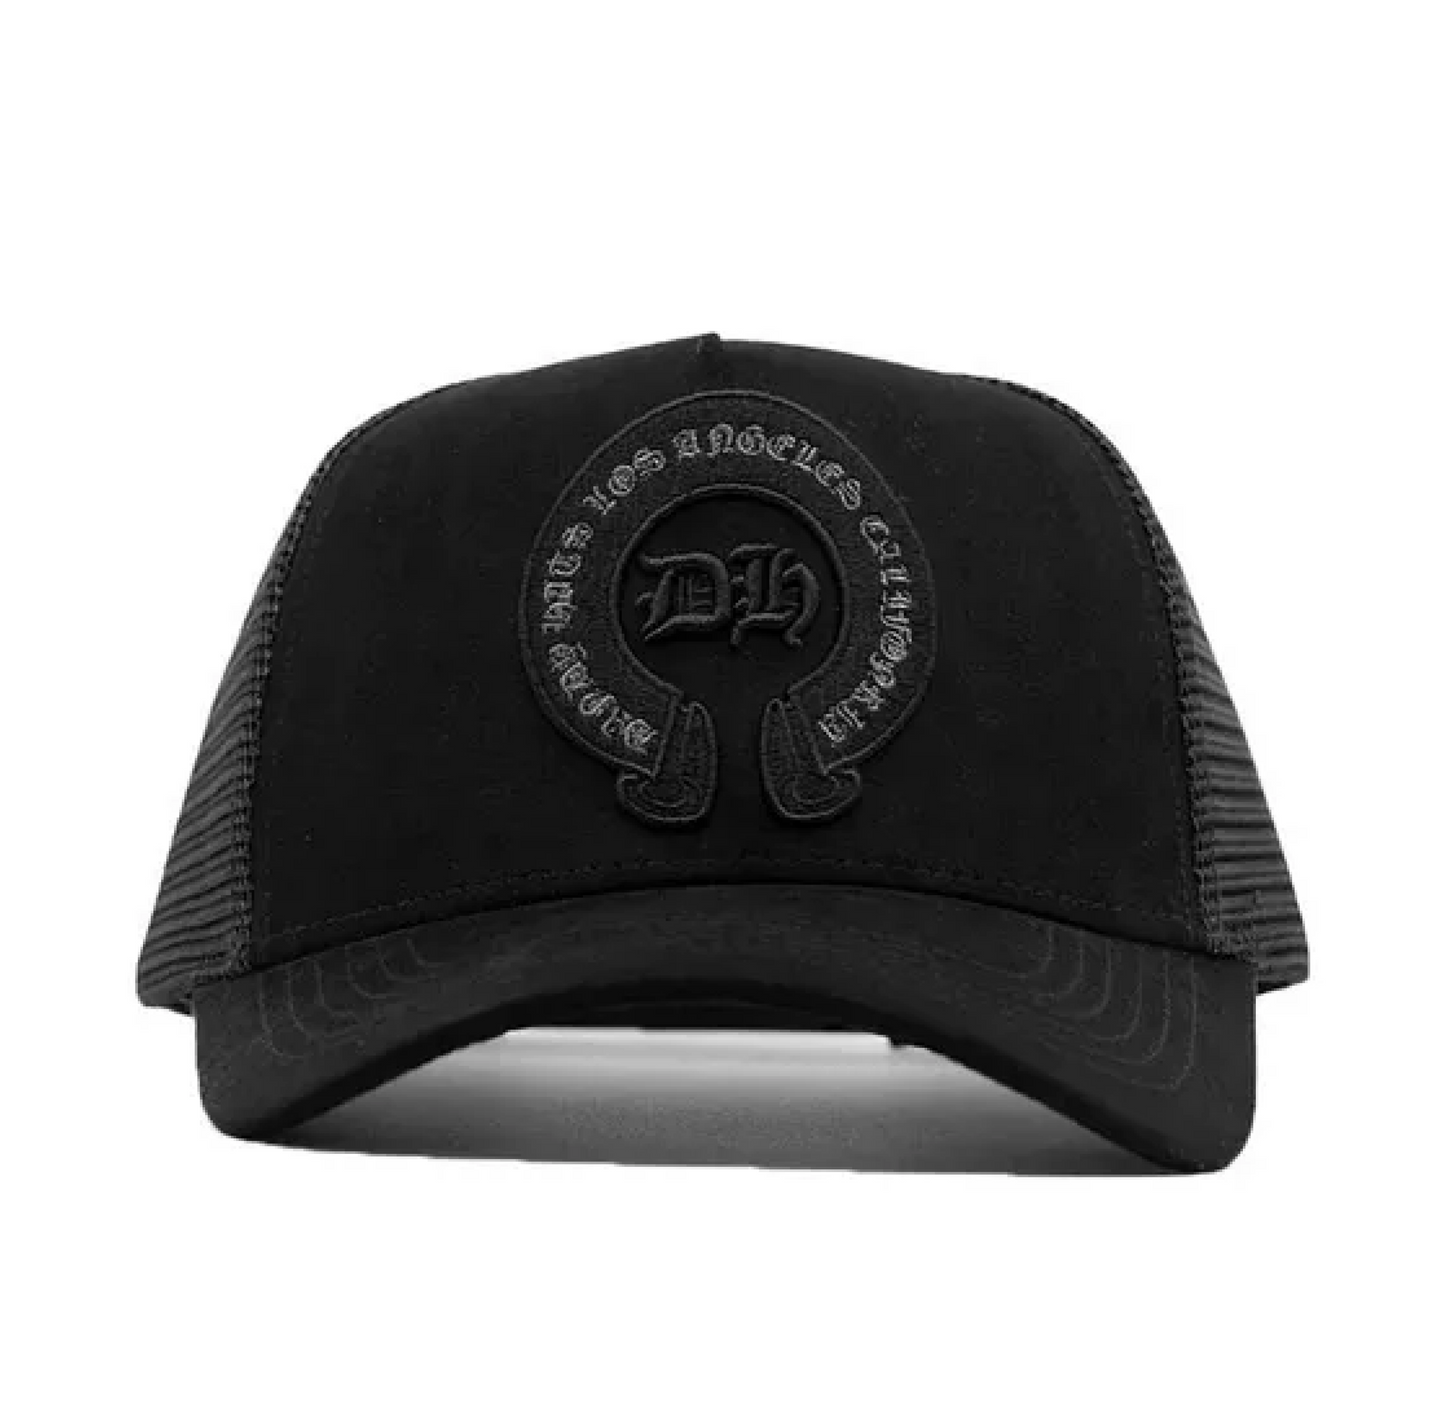 GORRA DANDY HATS DH BLACK IN BLACK